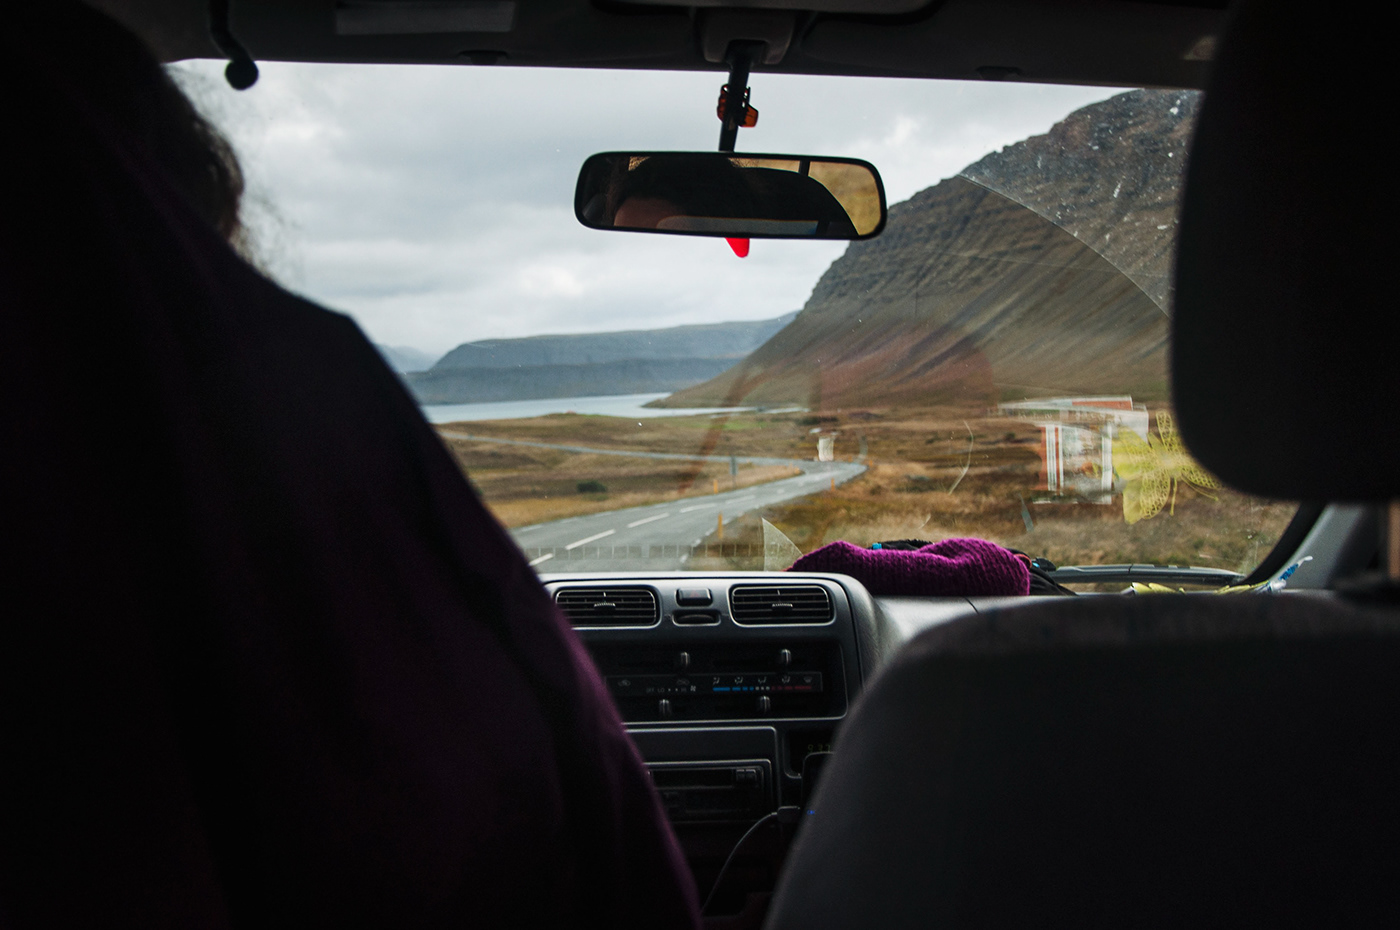 iceland Travel RoadTrip Landscape adventure north westfjords snaefellness Nature